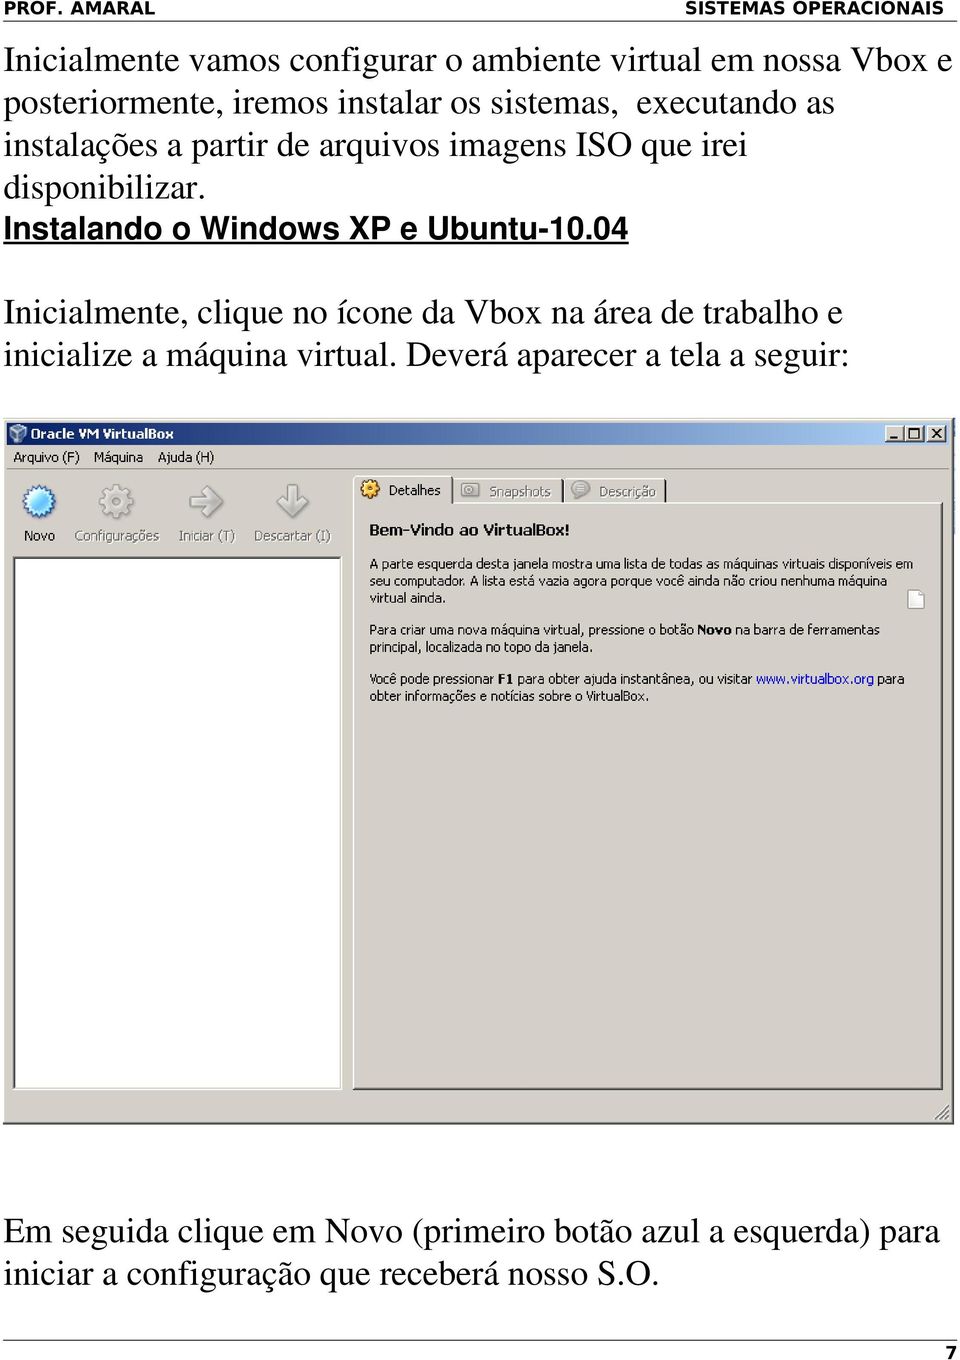 Instalando o Windows XP e Ubuntu 10.